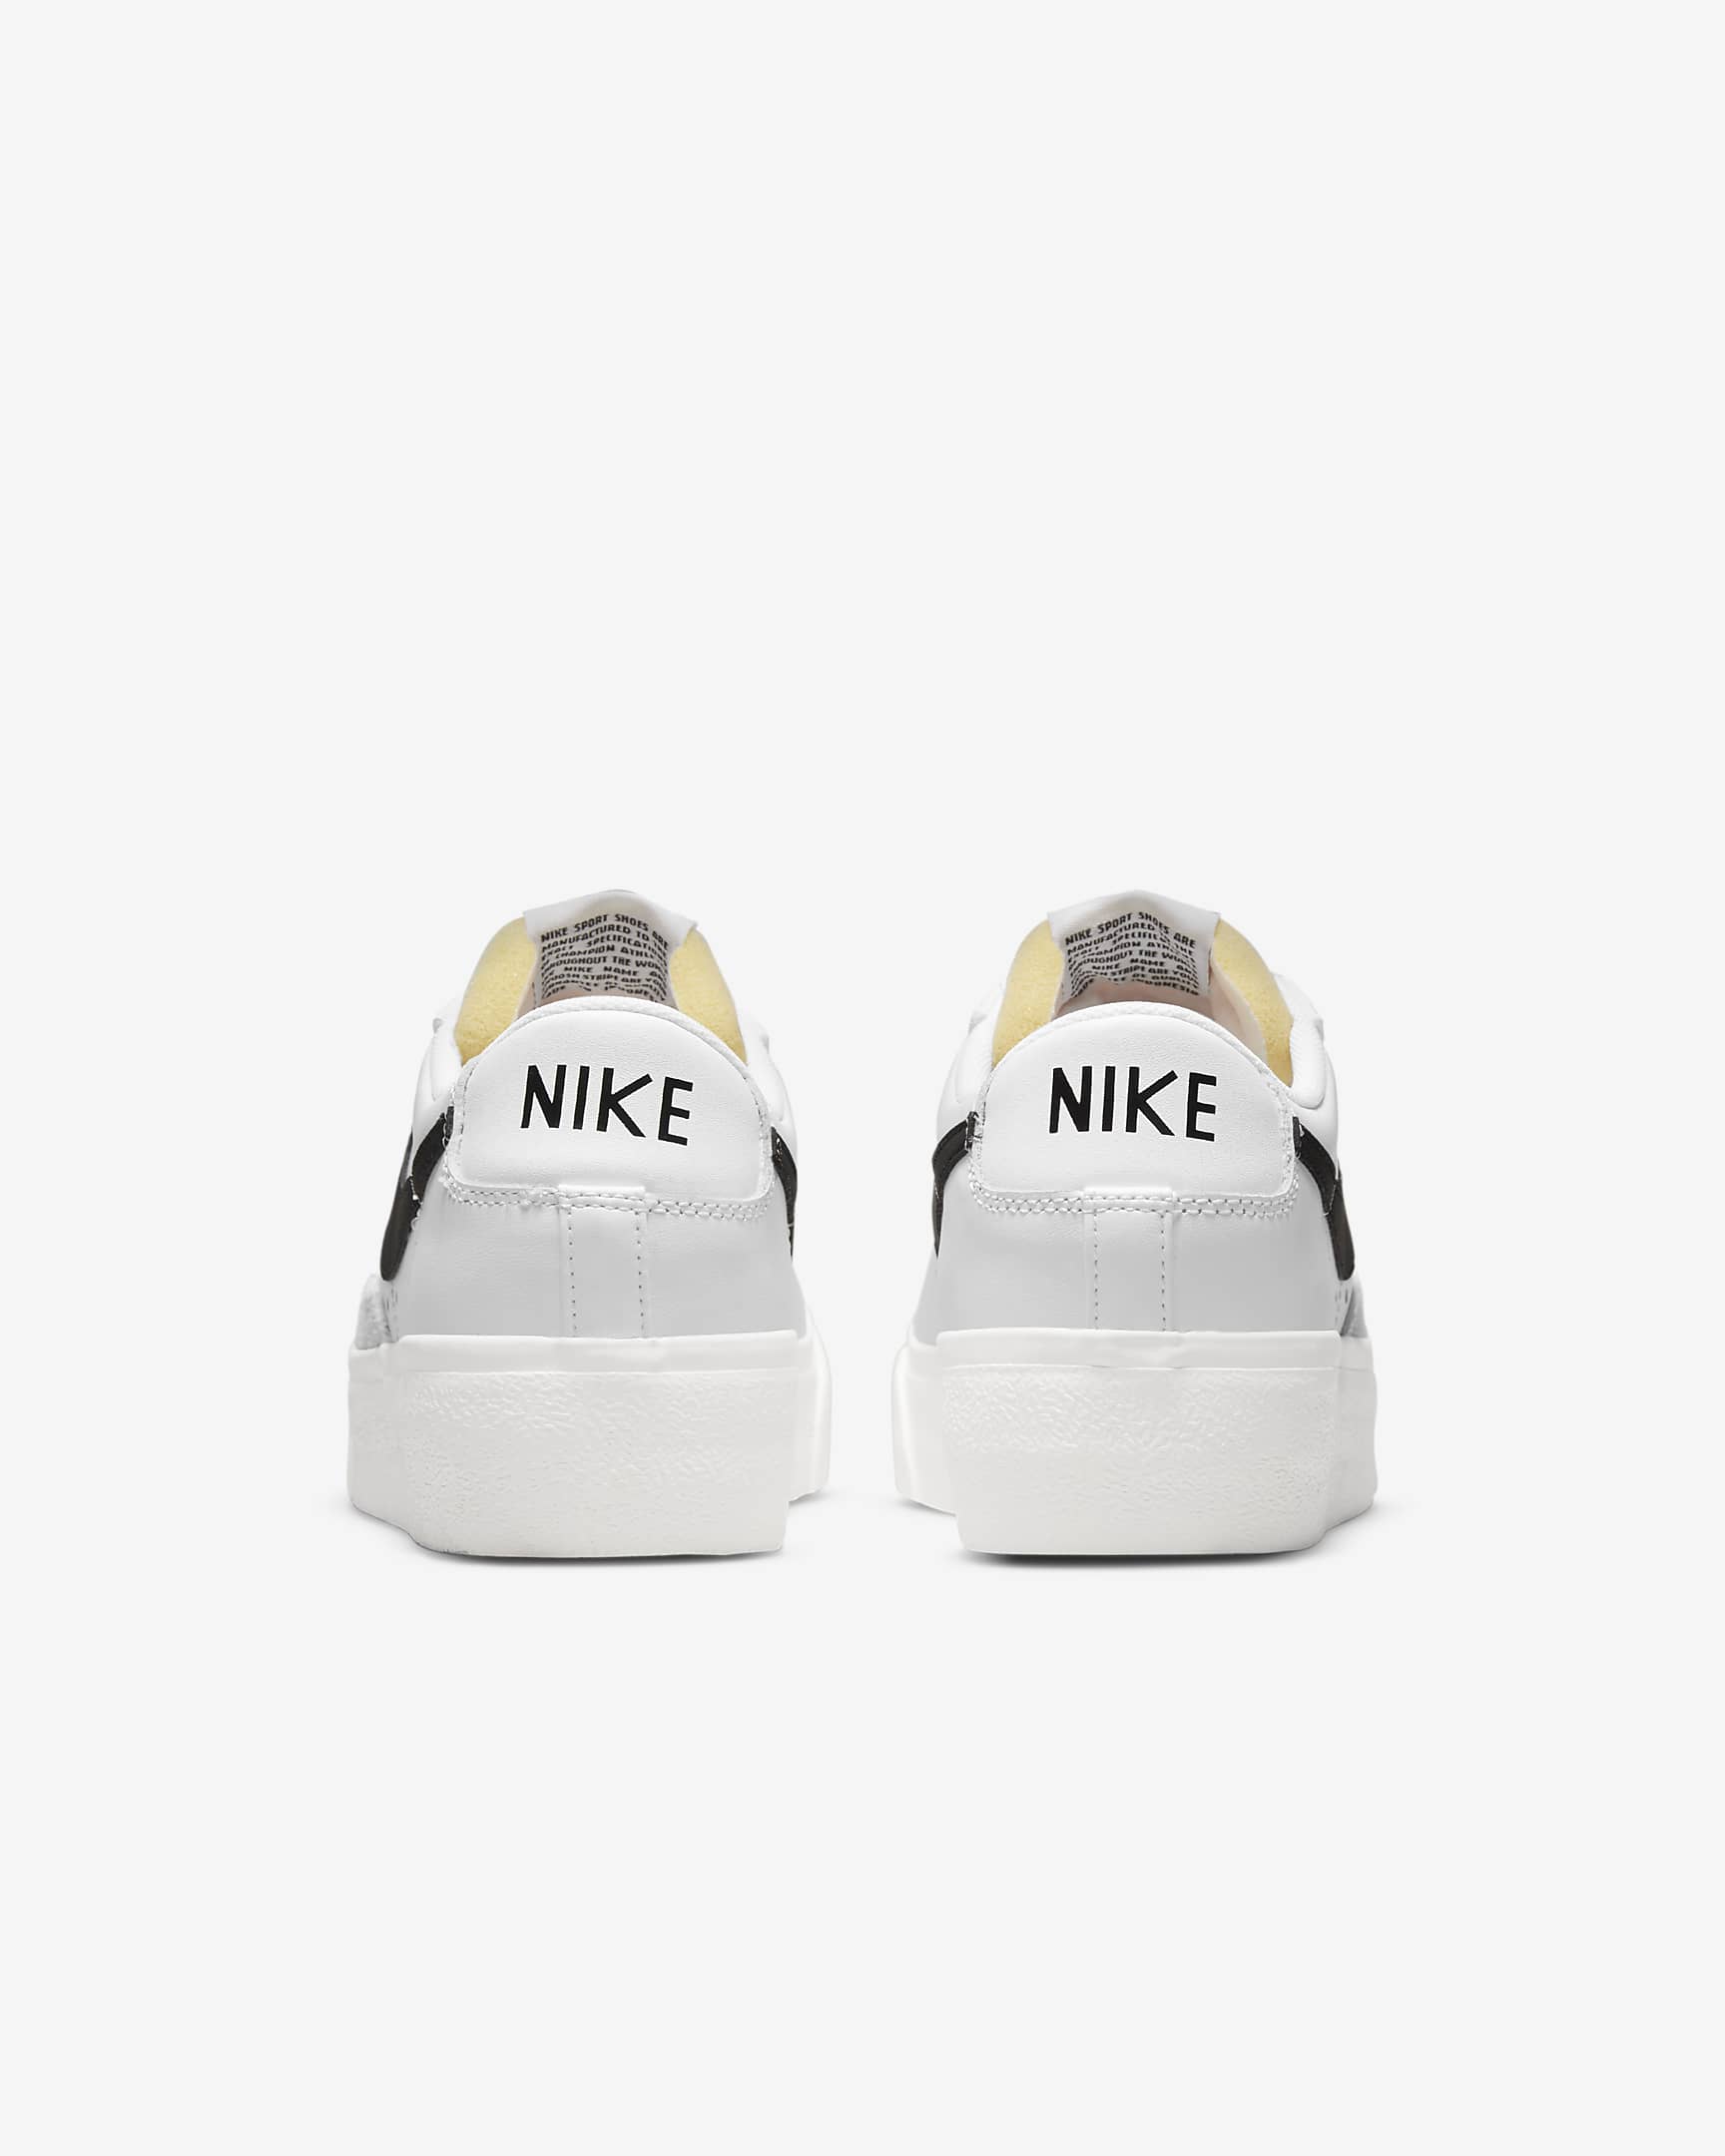 Nike Blazer Low Platform Women's Shoes - White/Sail/Team Orange/Black